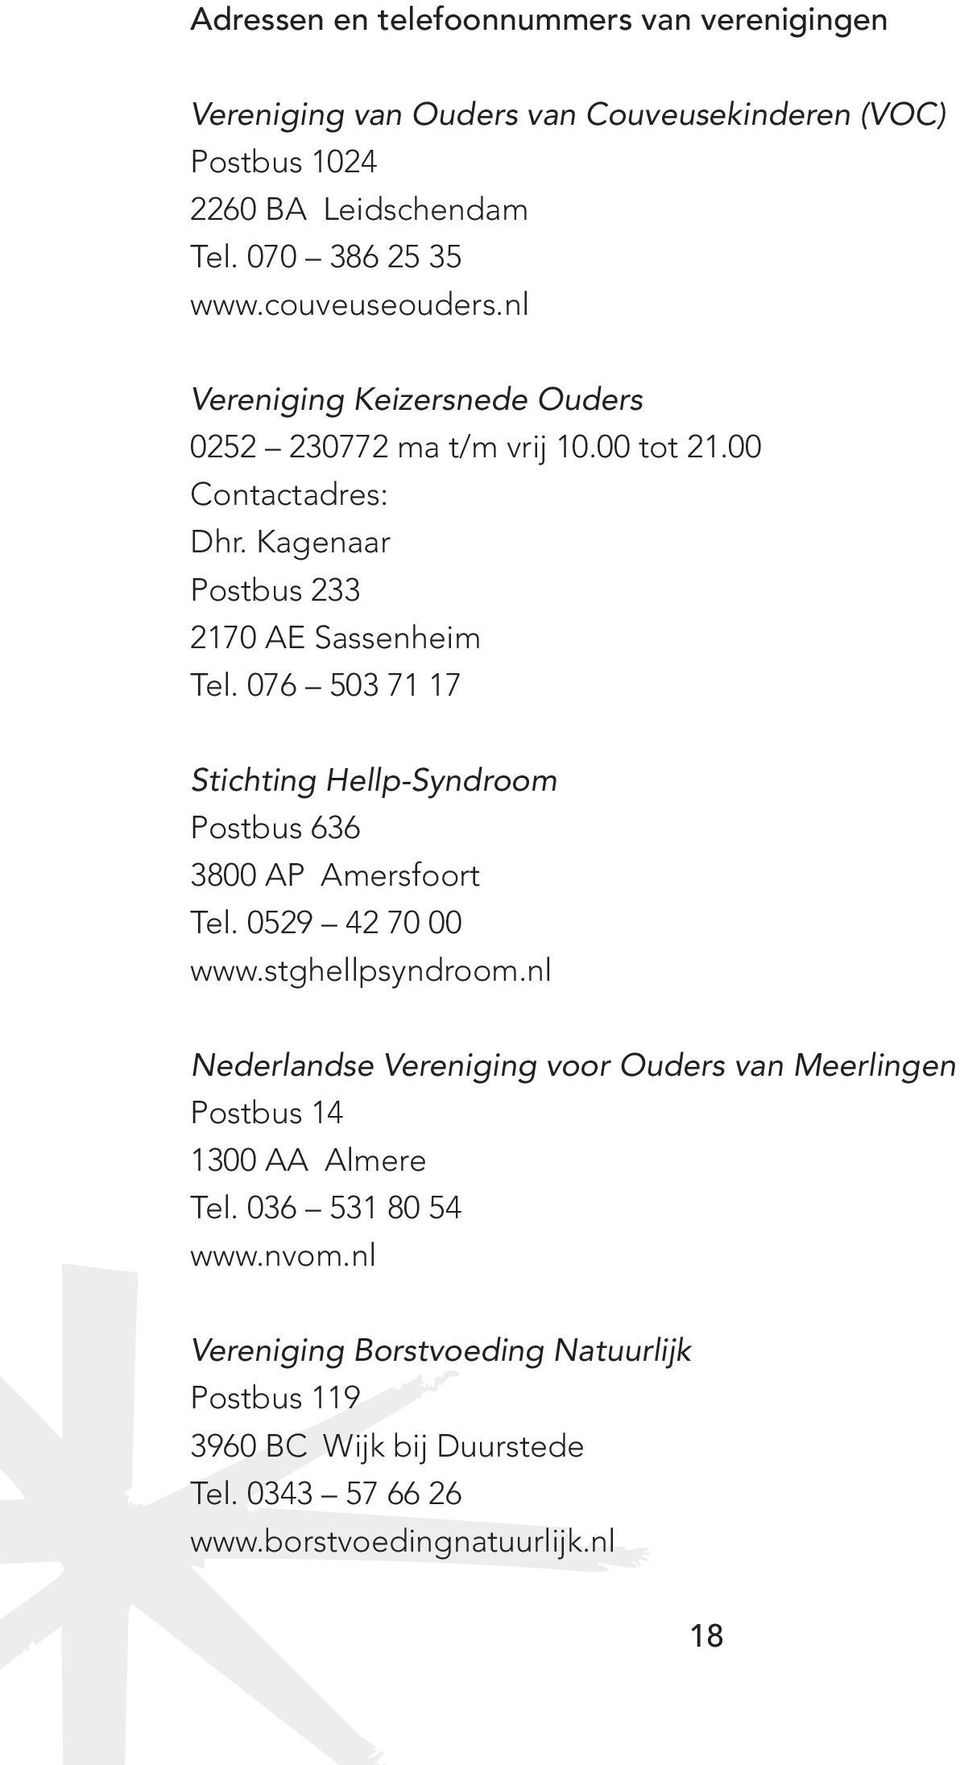 076 503 71 17 Stichting Hellp-Syndroom Postbus 636 3800 AP Amersfoort Tel. 0529 42 70 00 www.stghellpsyndroom.